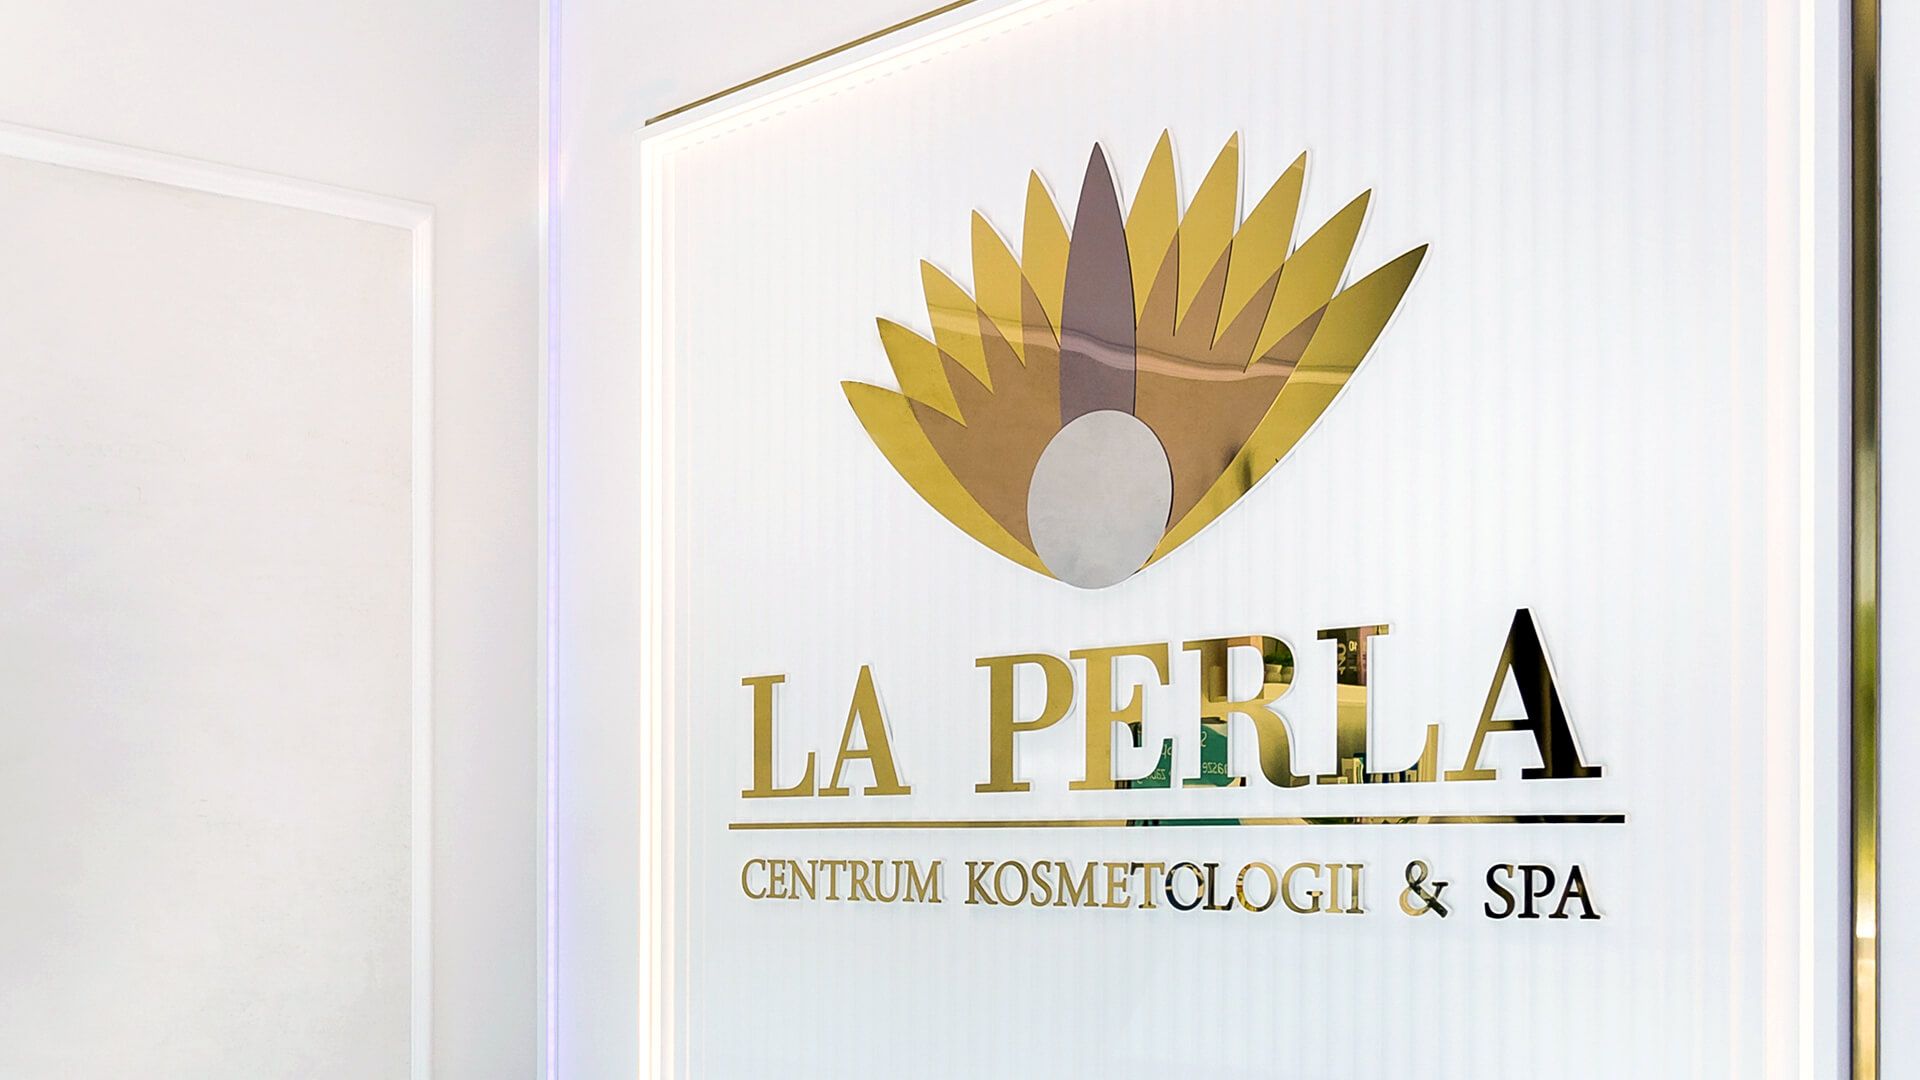 LA PERLA - 3D spatial letters in gold at the reception desk